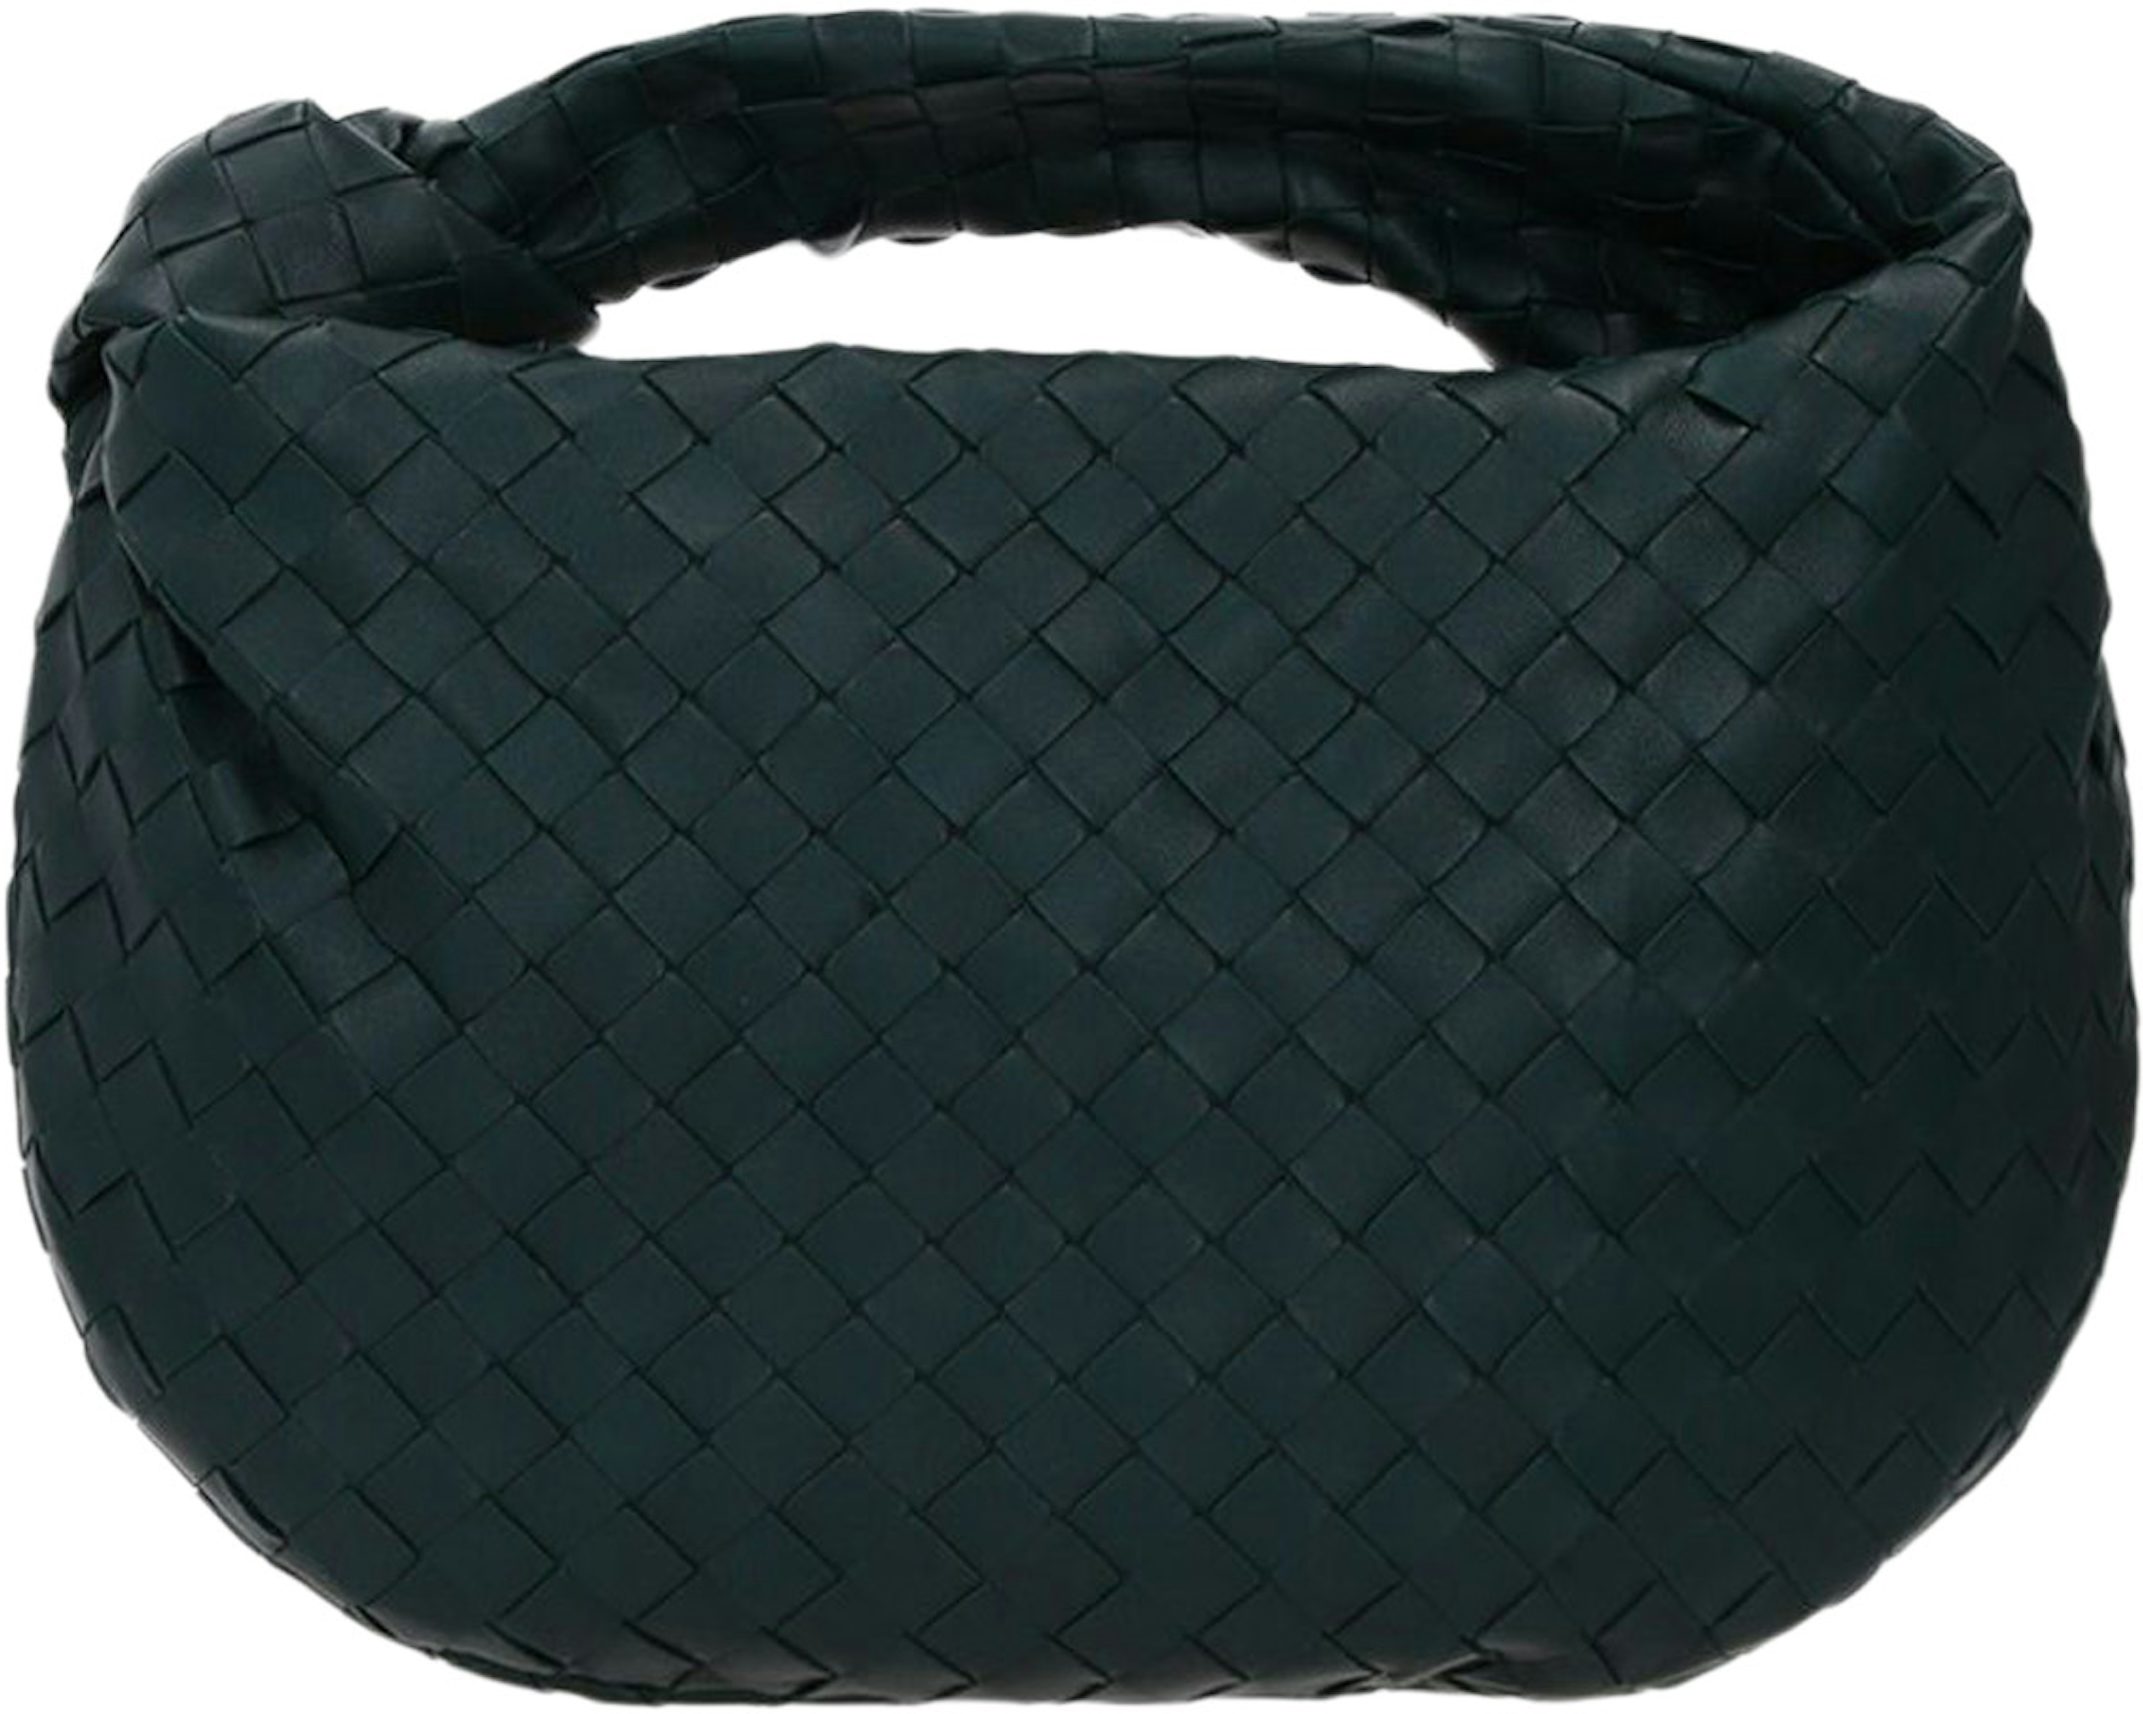 Bottega Veneta Teen Jodie Intrecciato Taupe Leather Top Handle Bag